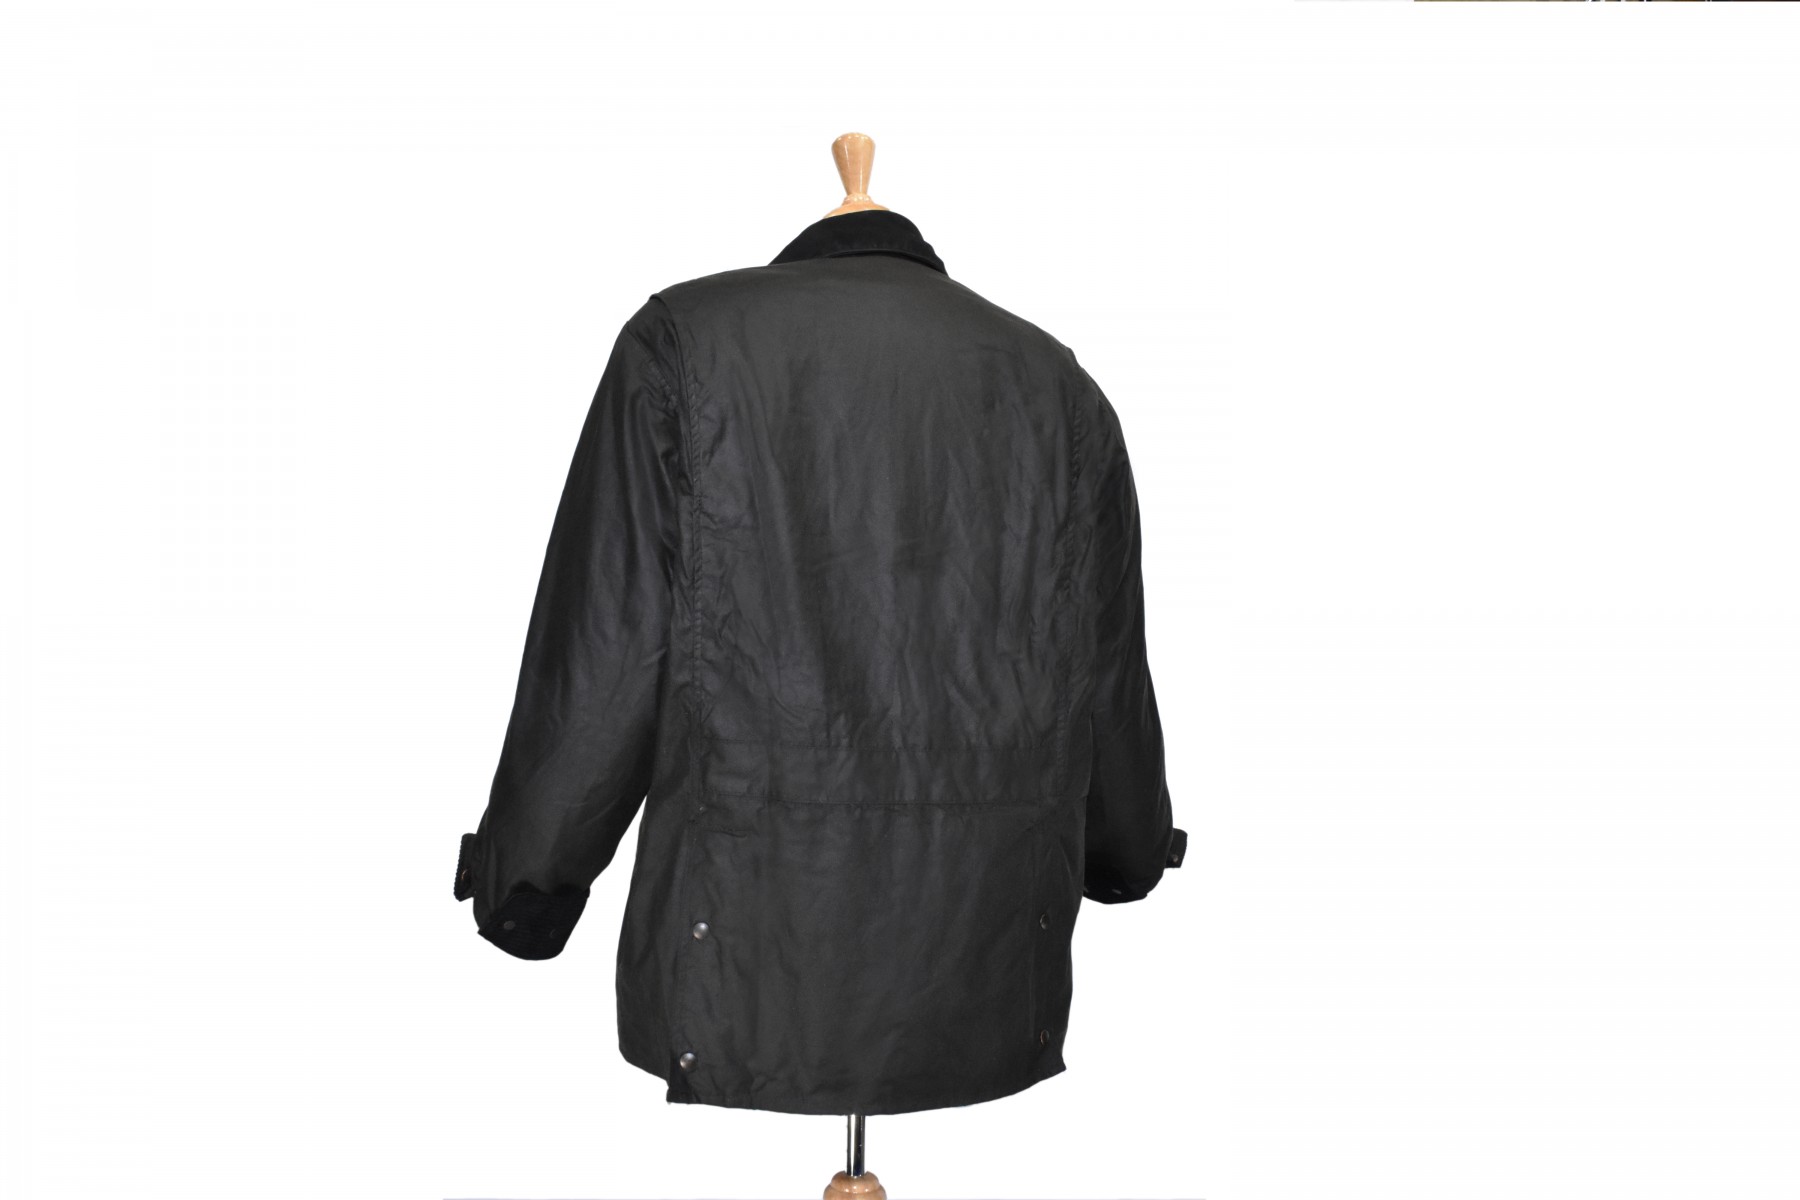 Canberra Jacket - Outerwear - Men's - Apparel